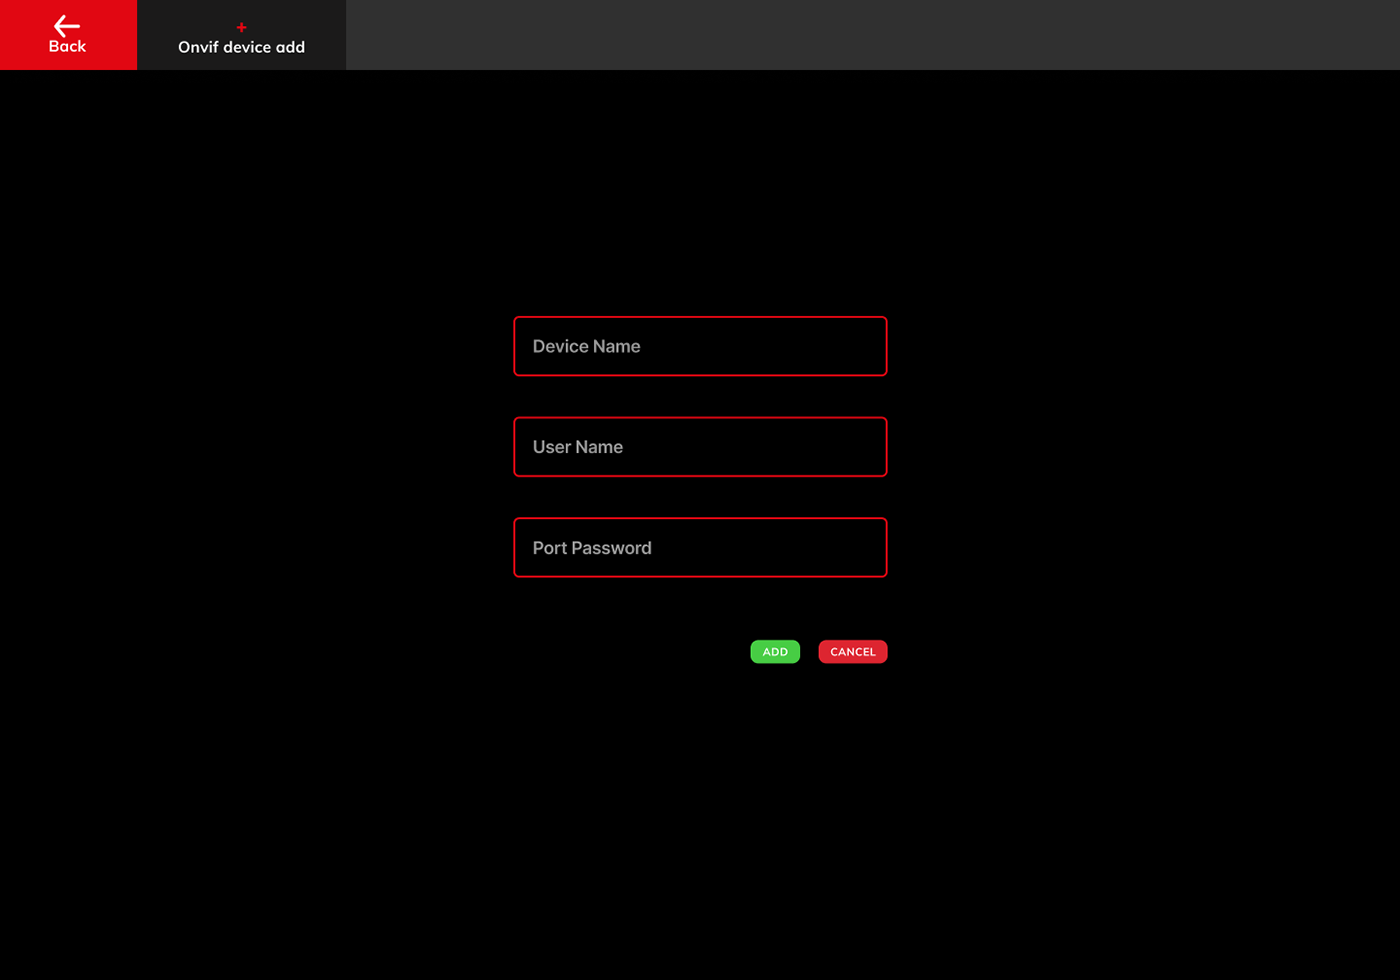 dashboard portfolio ui design Video Management Software vmscdesign web application